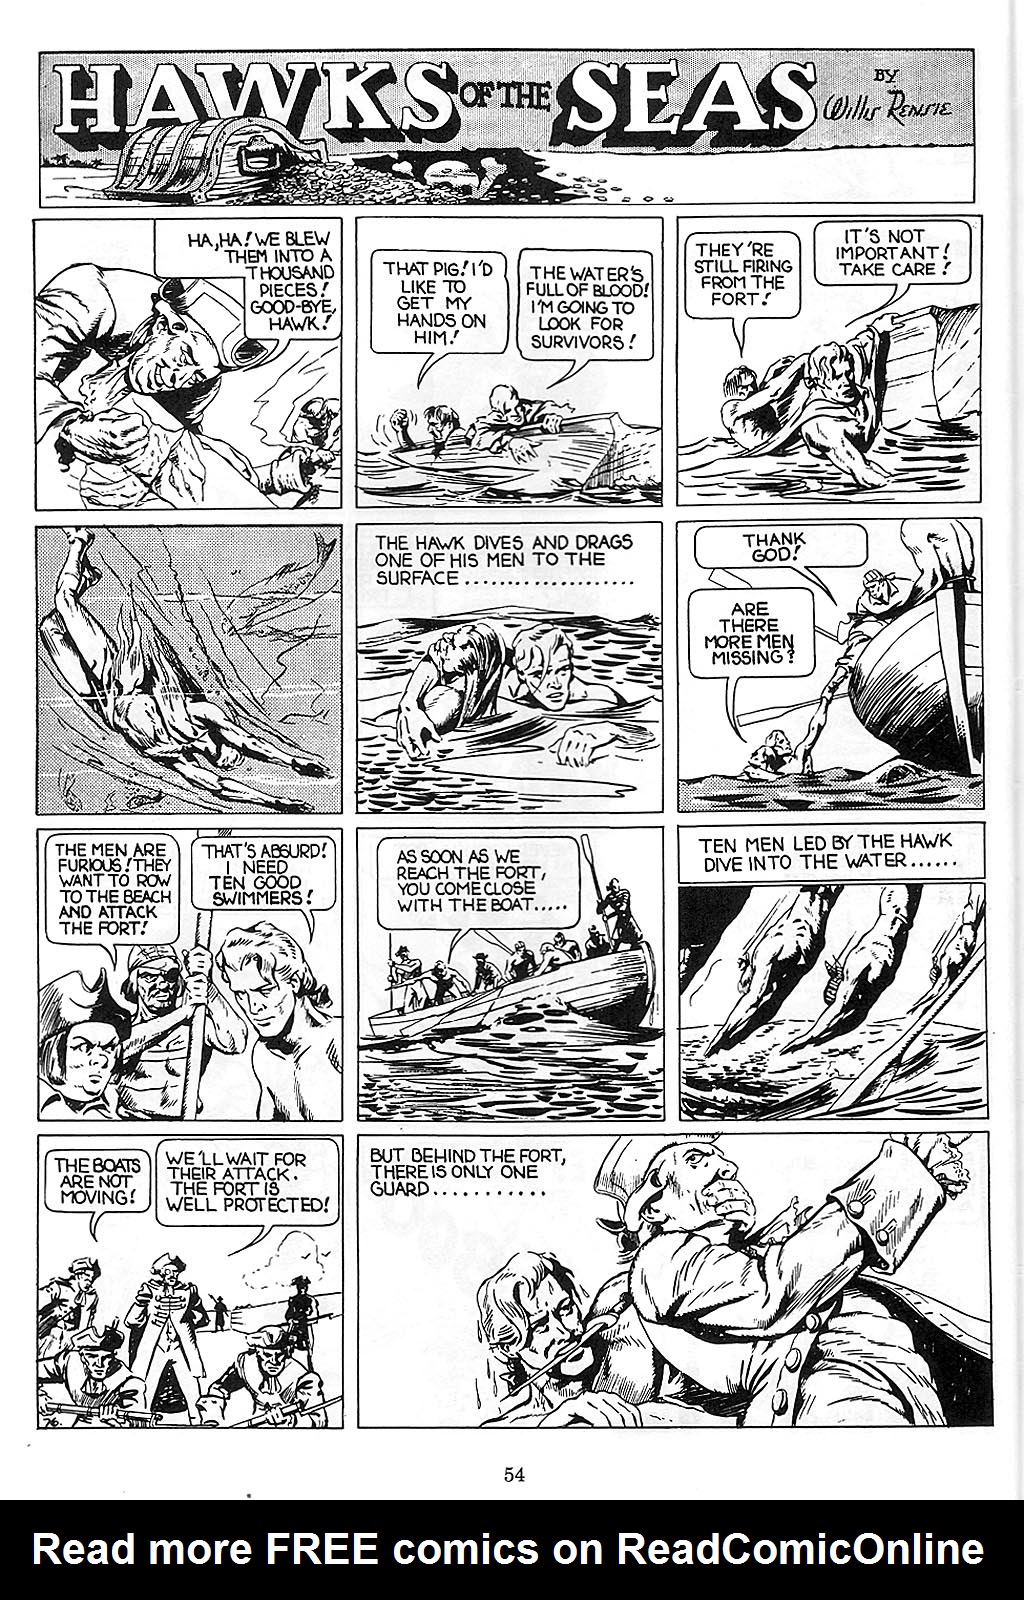 Read online Will Eisner's Hawks of the Seas comic -  Issue # TPB - 55